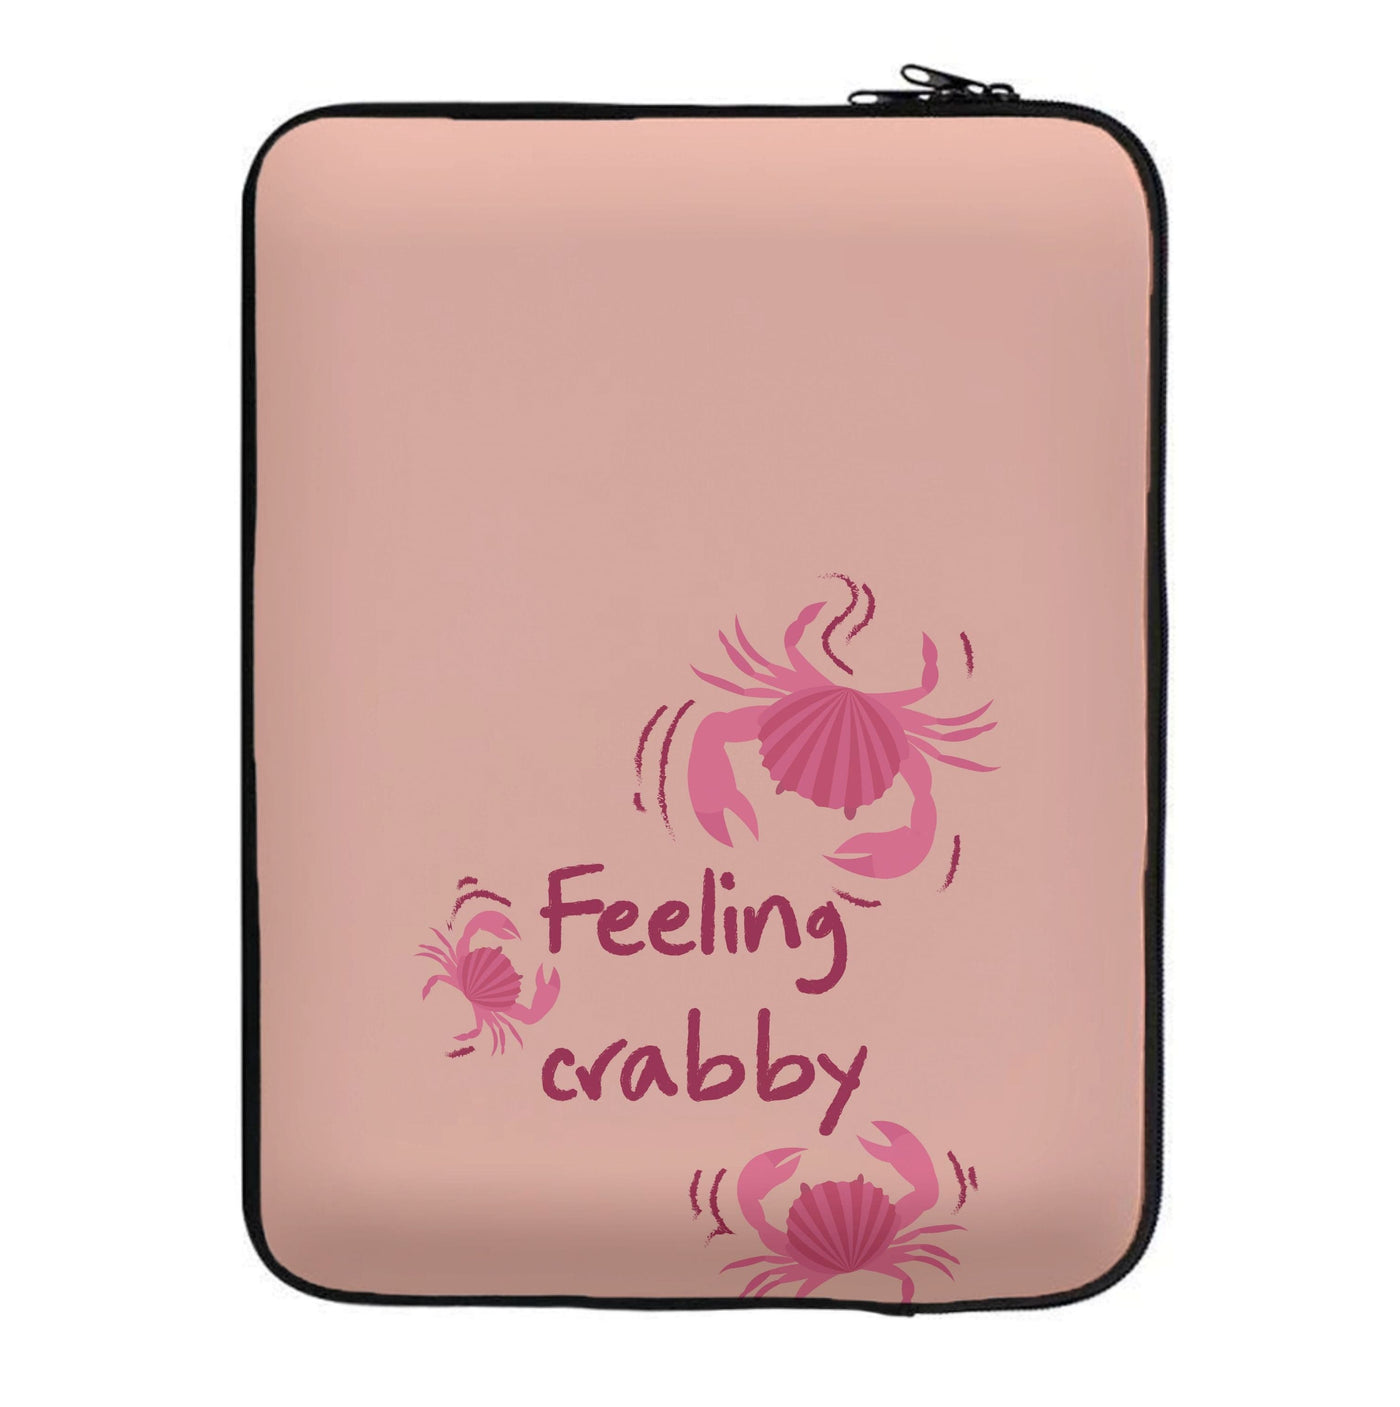 Feeling Crabby - Sealife Laptop Sleeve